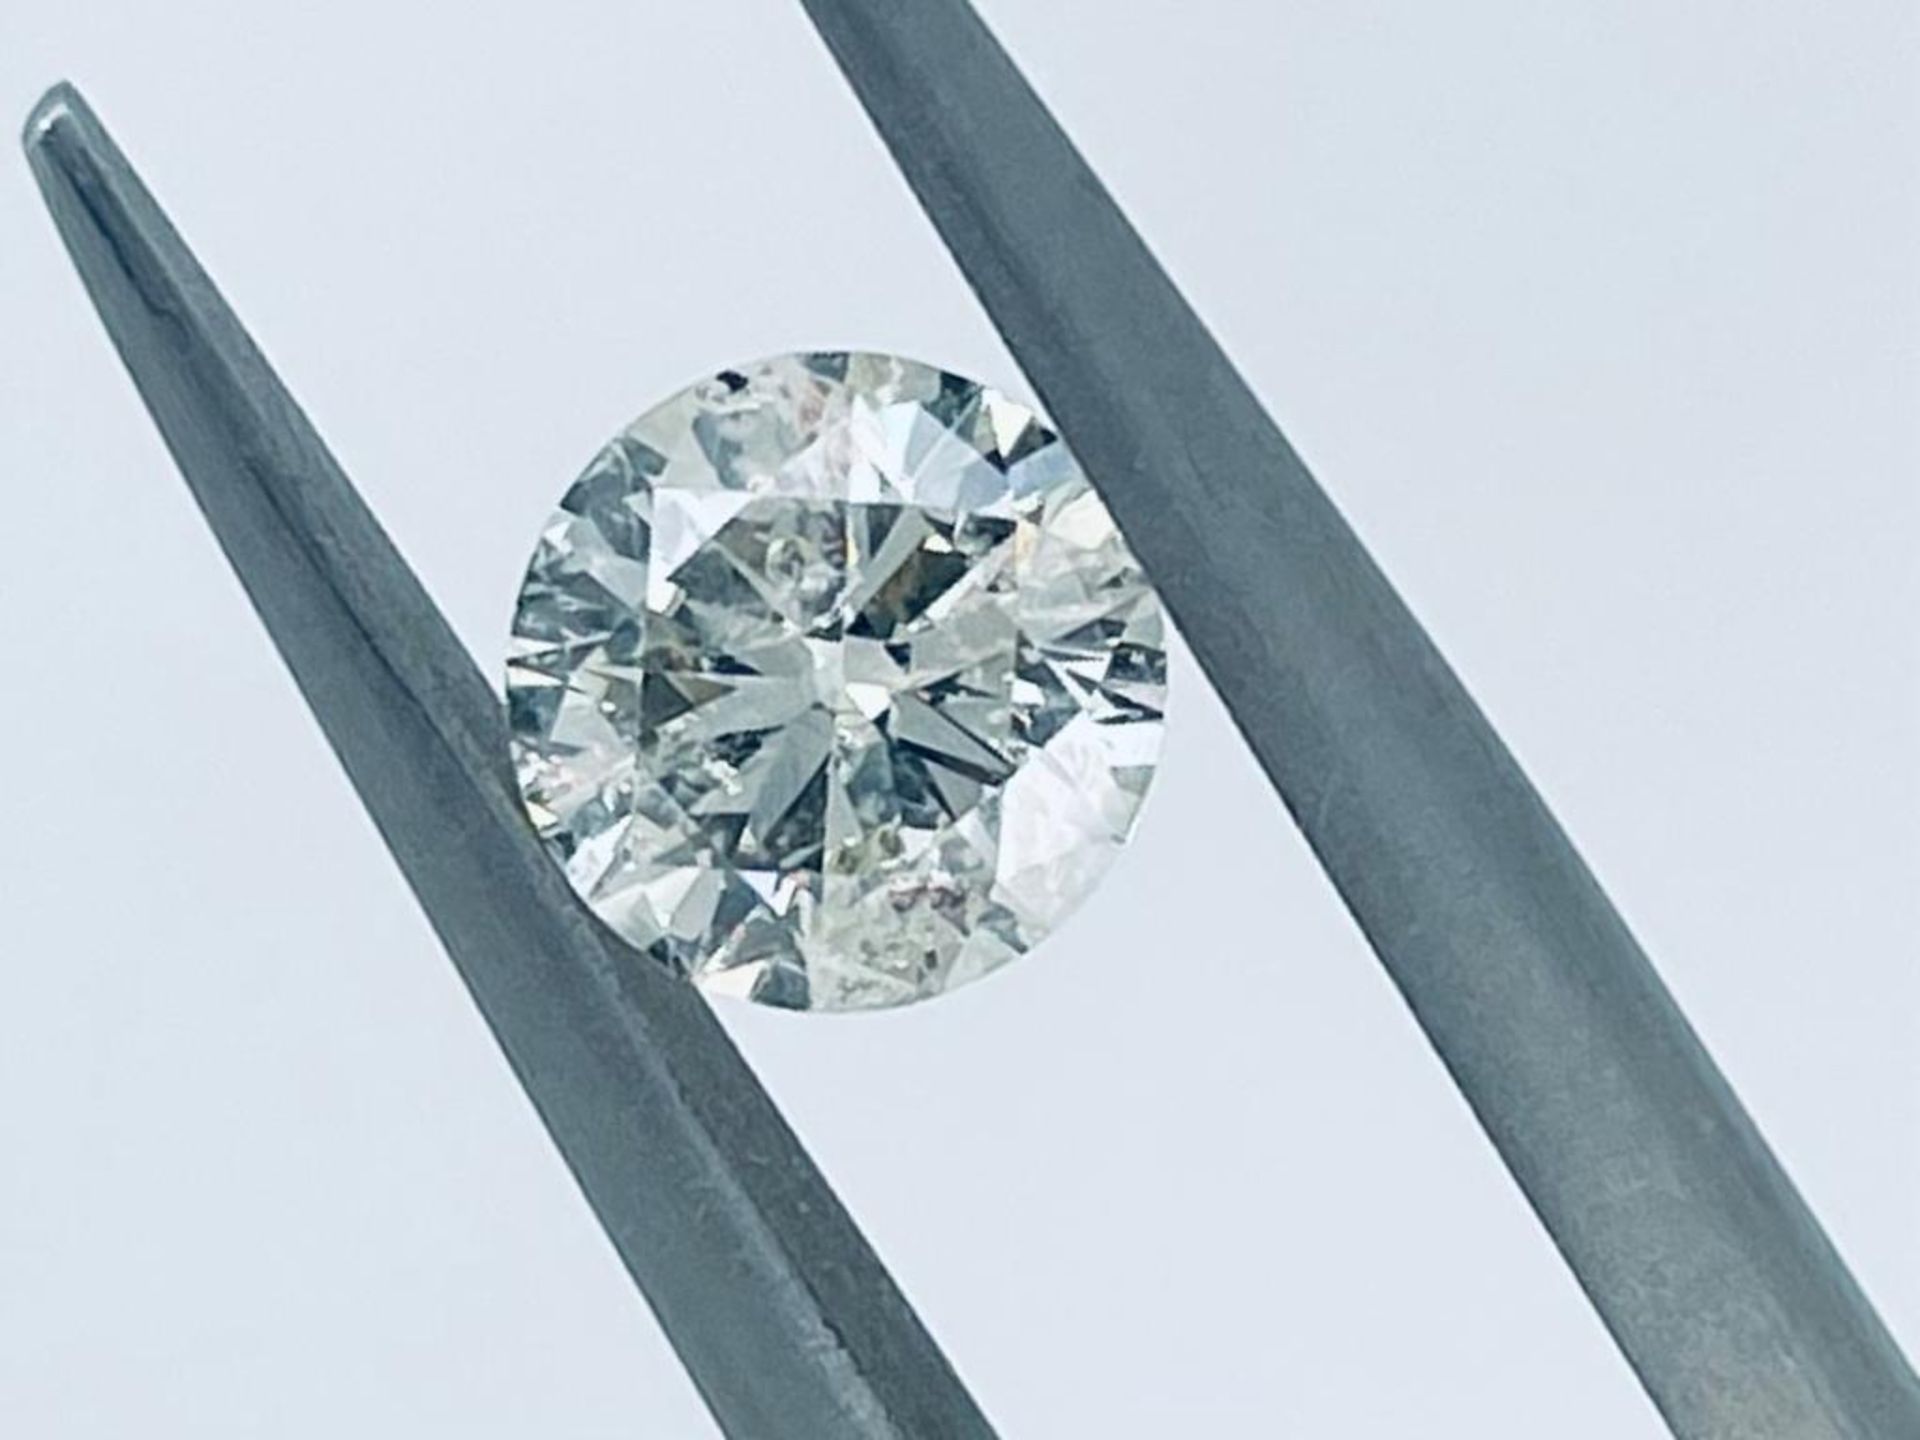 1 DIAMOND EXALTED CLARITY 0.98 CT I - I1 - BRILLIANT CUT - CERTIFICATE NOT PRESENT - C20404-2